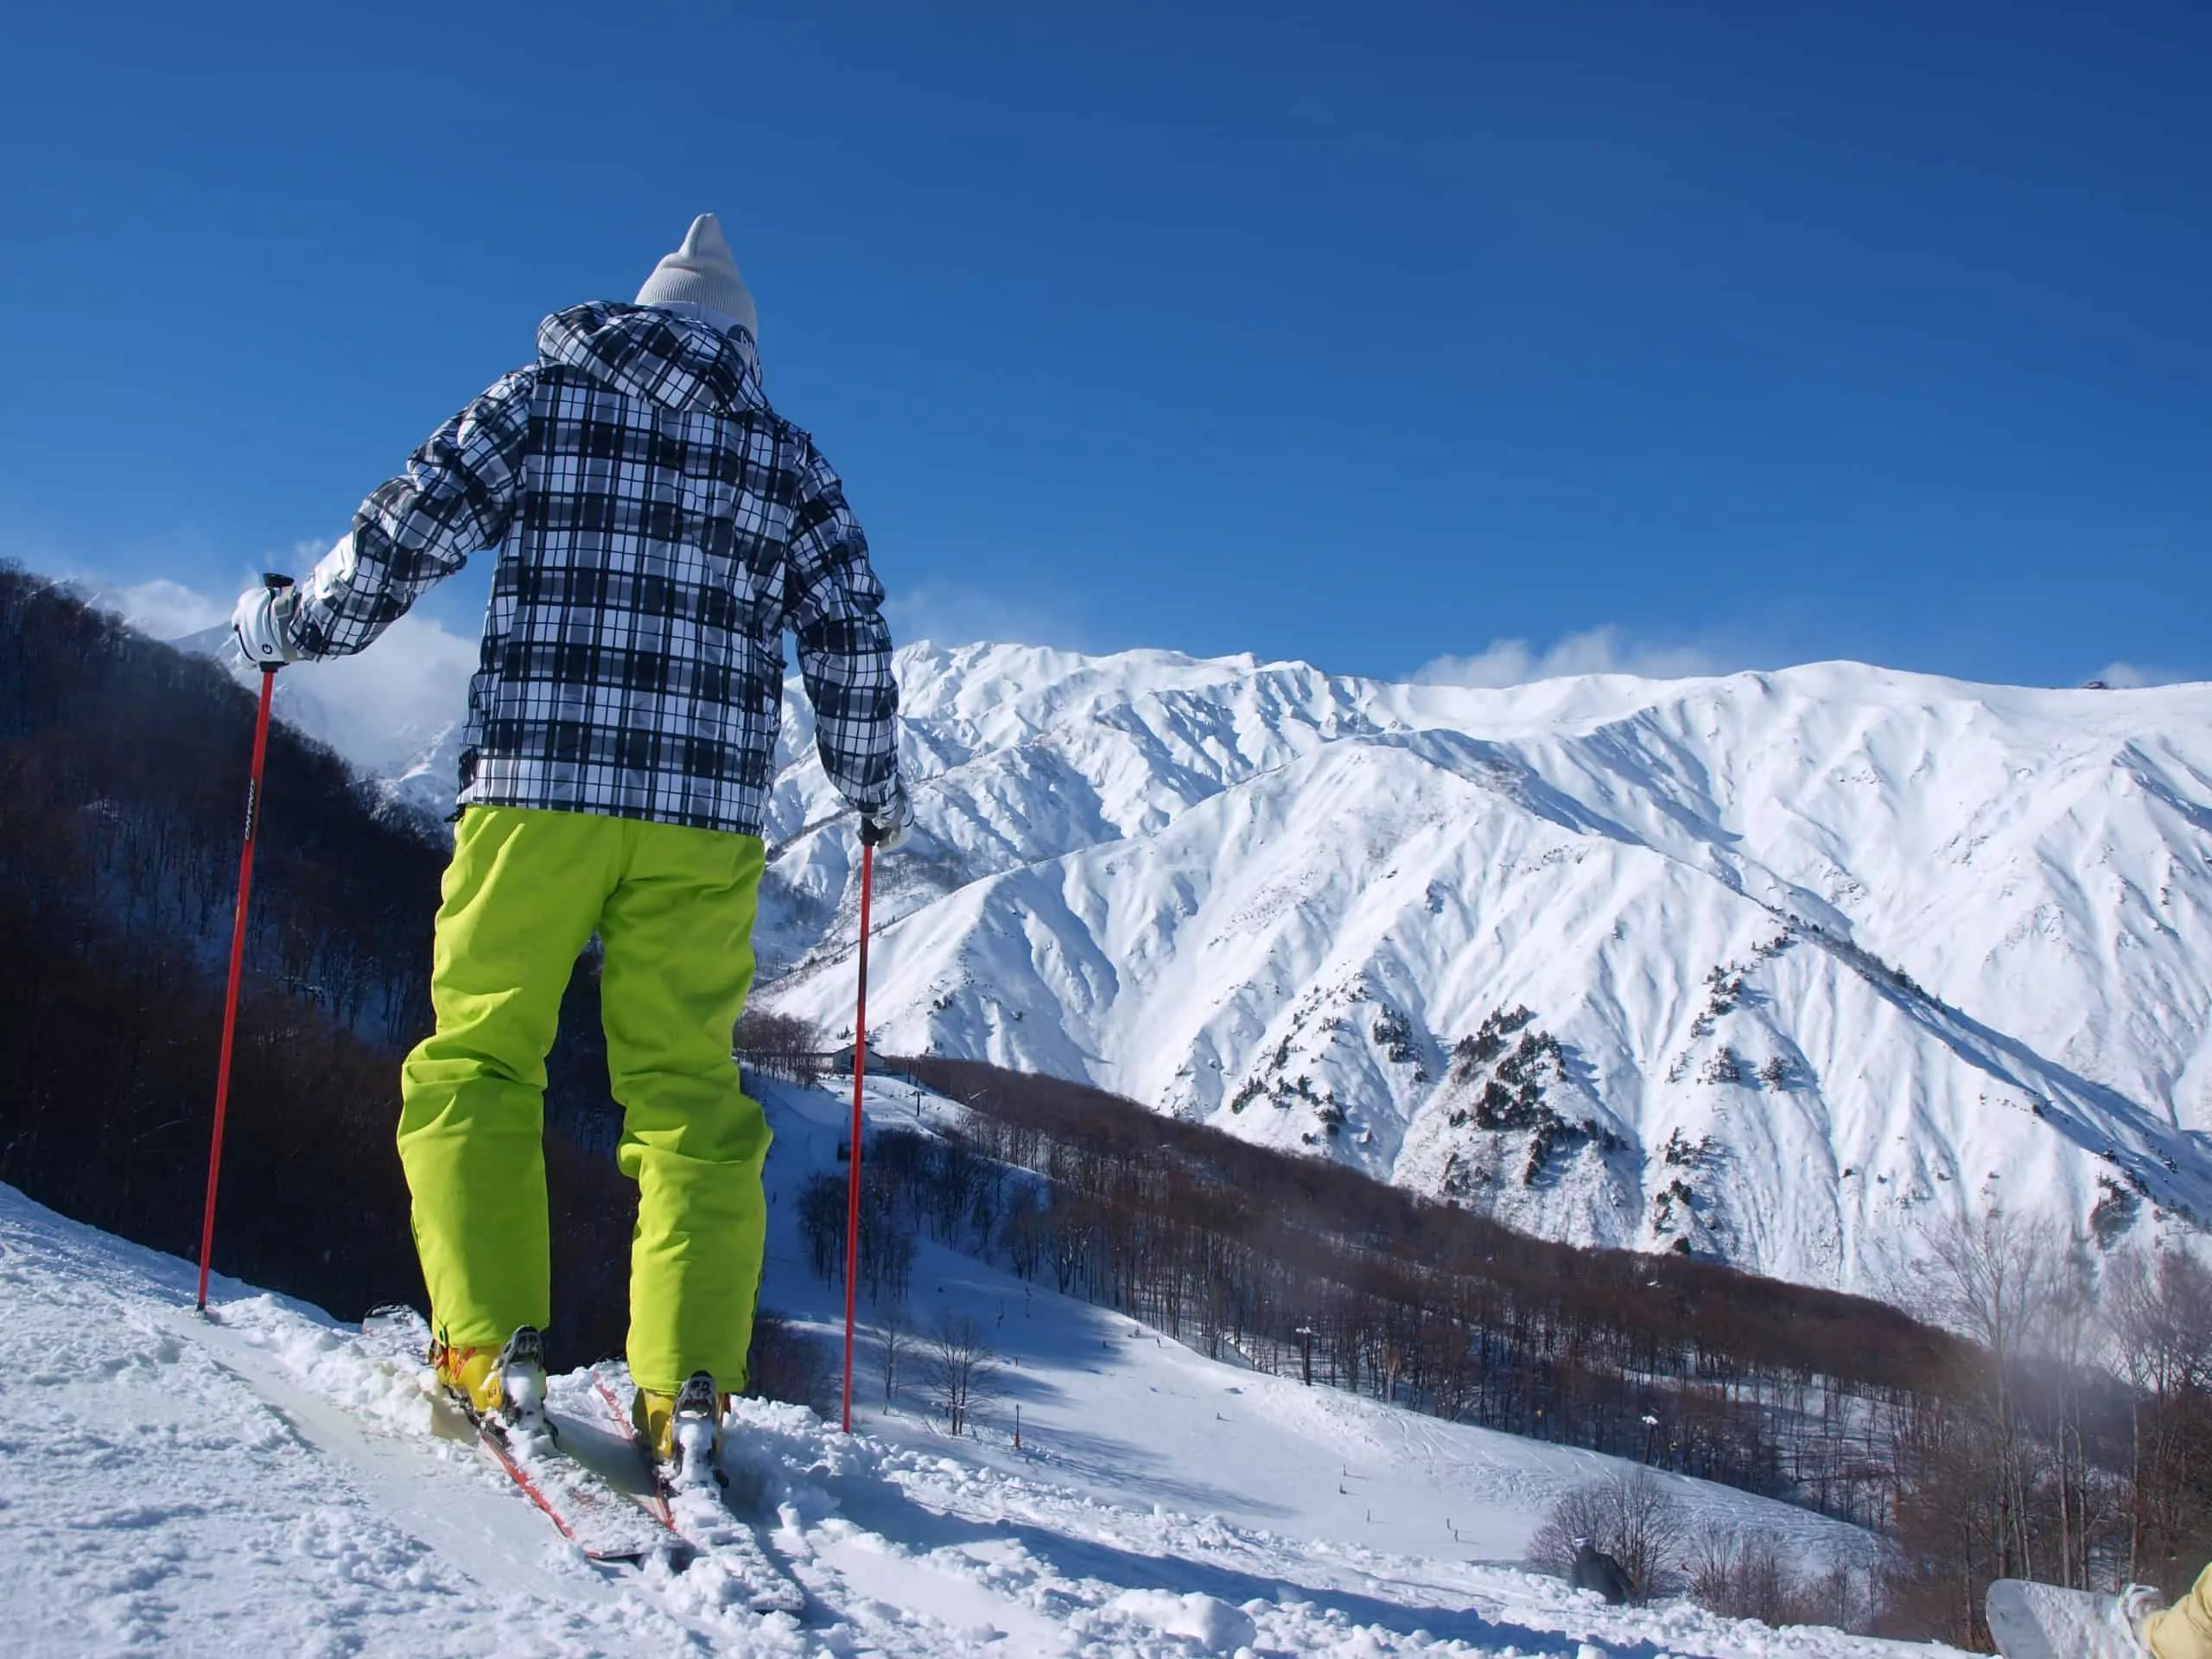 Hakuba 47 Winter Sports Park in Japan, East Asia | Snowboarding,Skiing - Rated 3.9